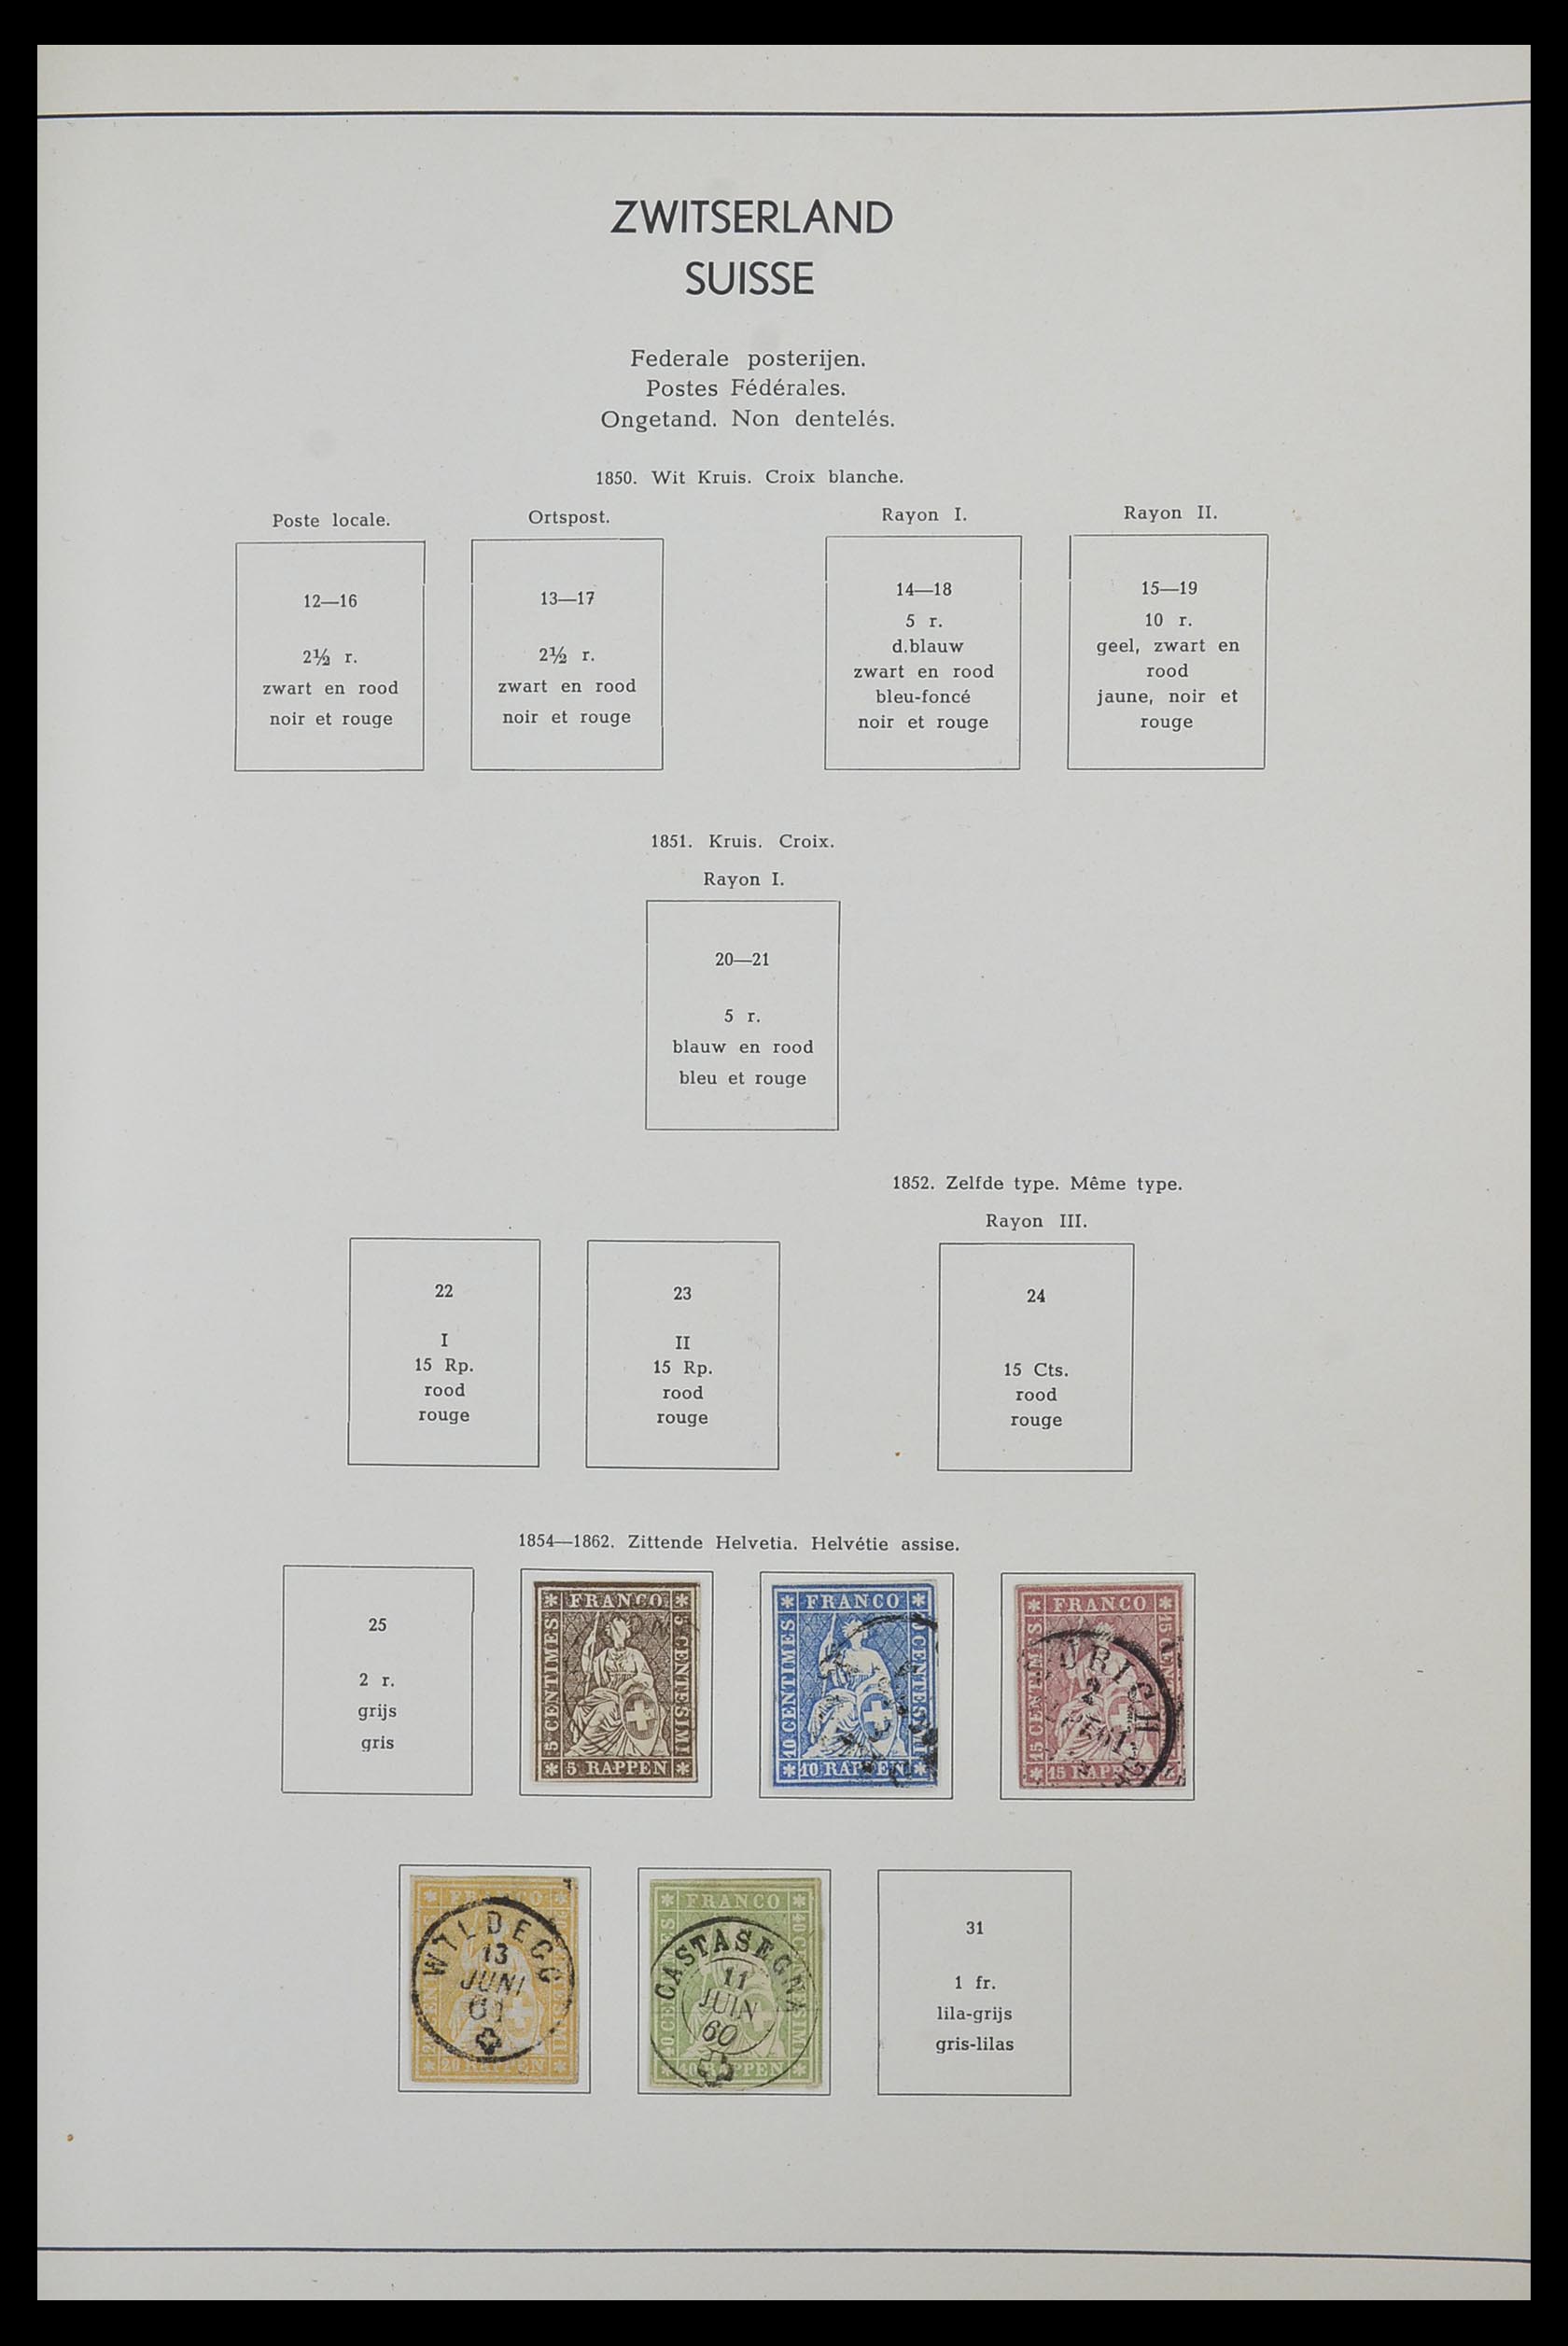 33601 001 - Stamp collection 33601 Switzerland 1854-1985.